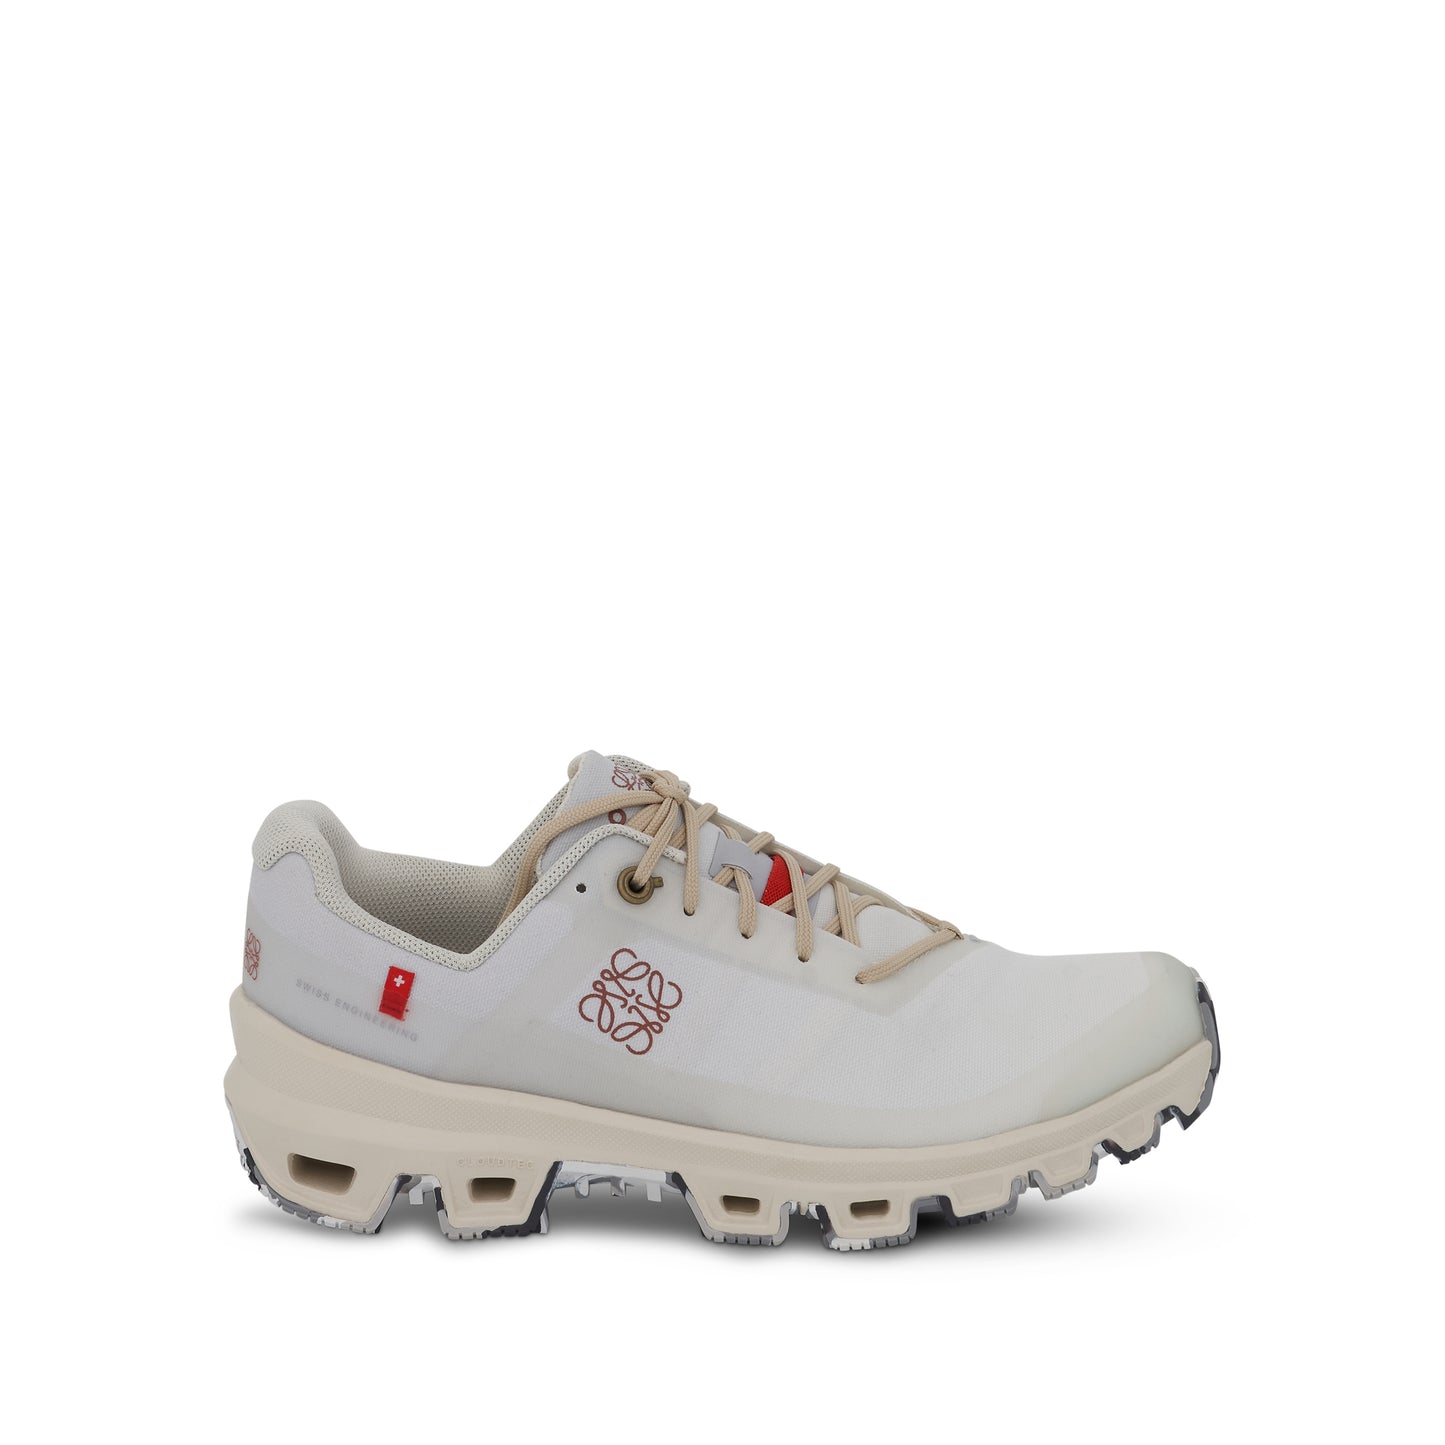 Loewe x ON Cloudventure Sneaker in Gradient Grey